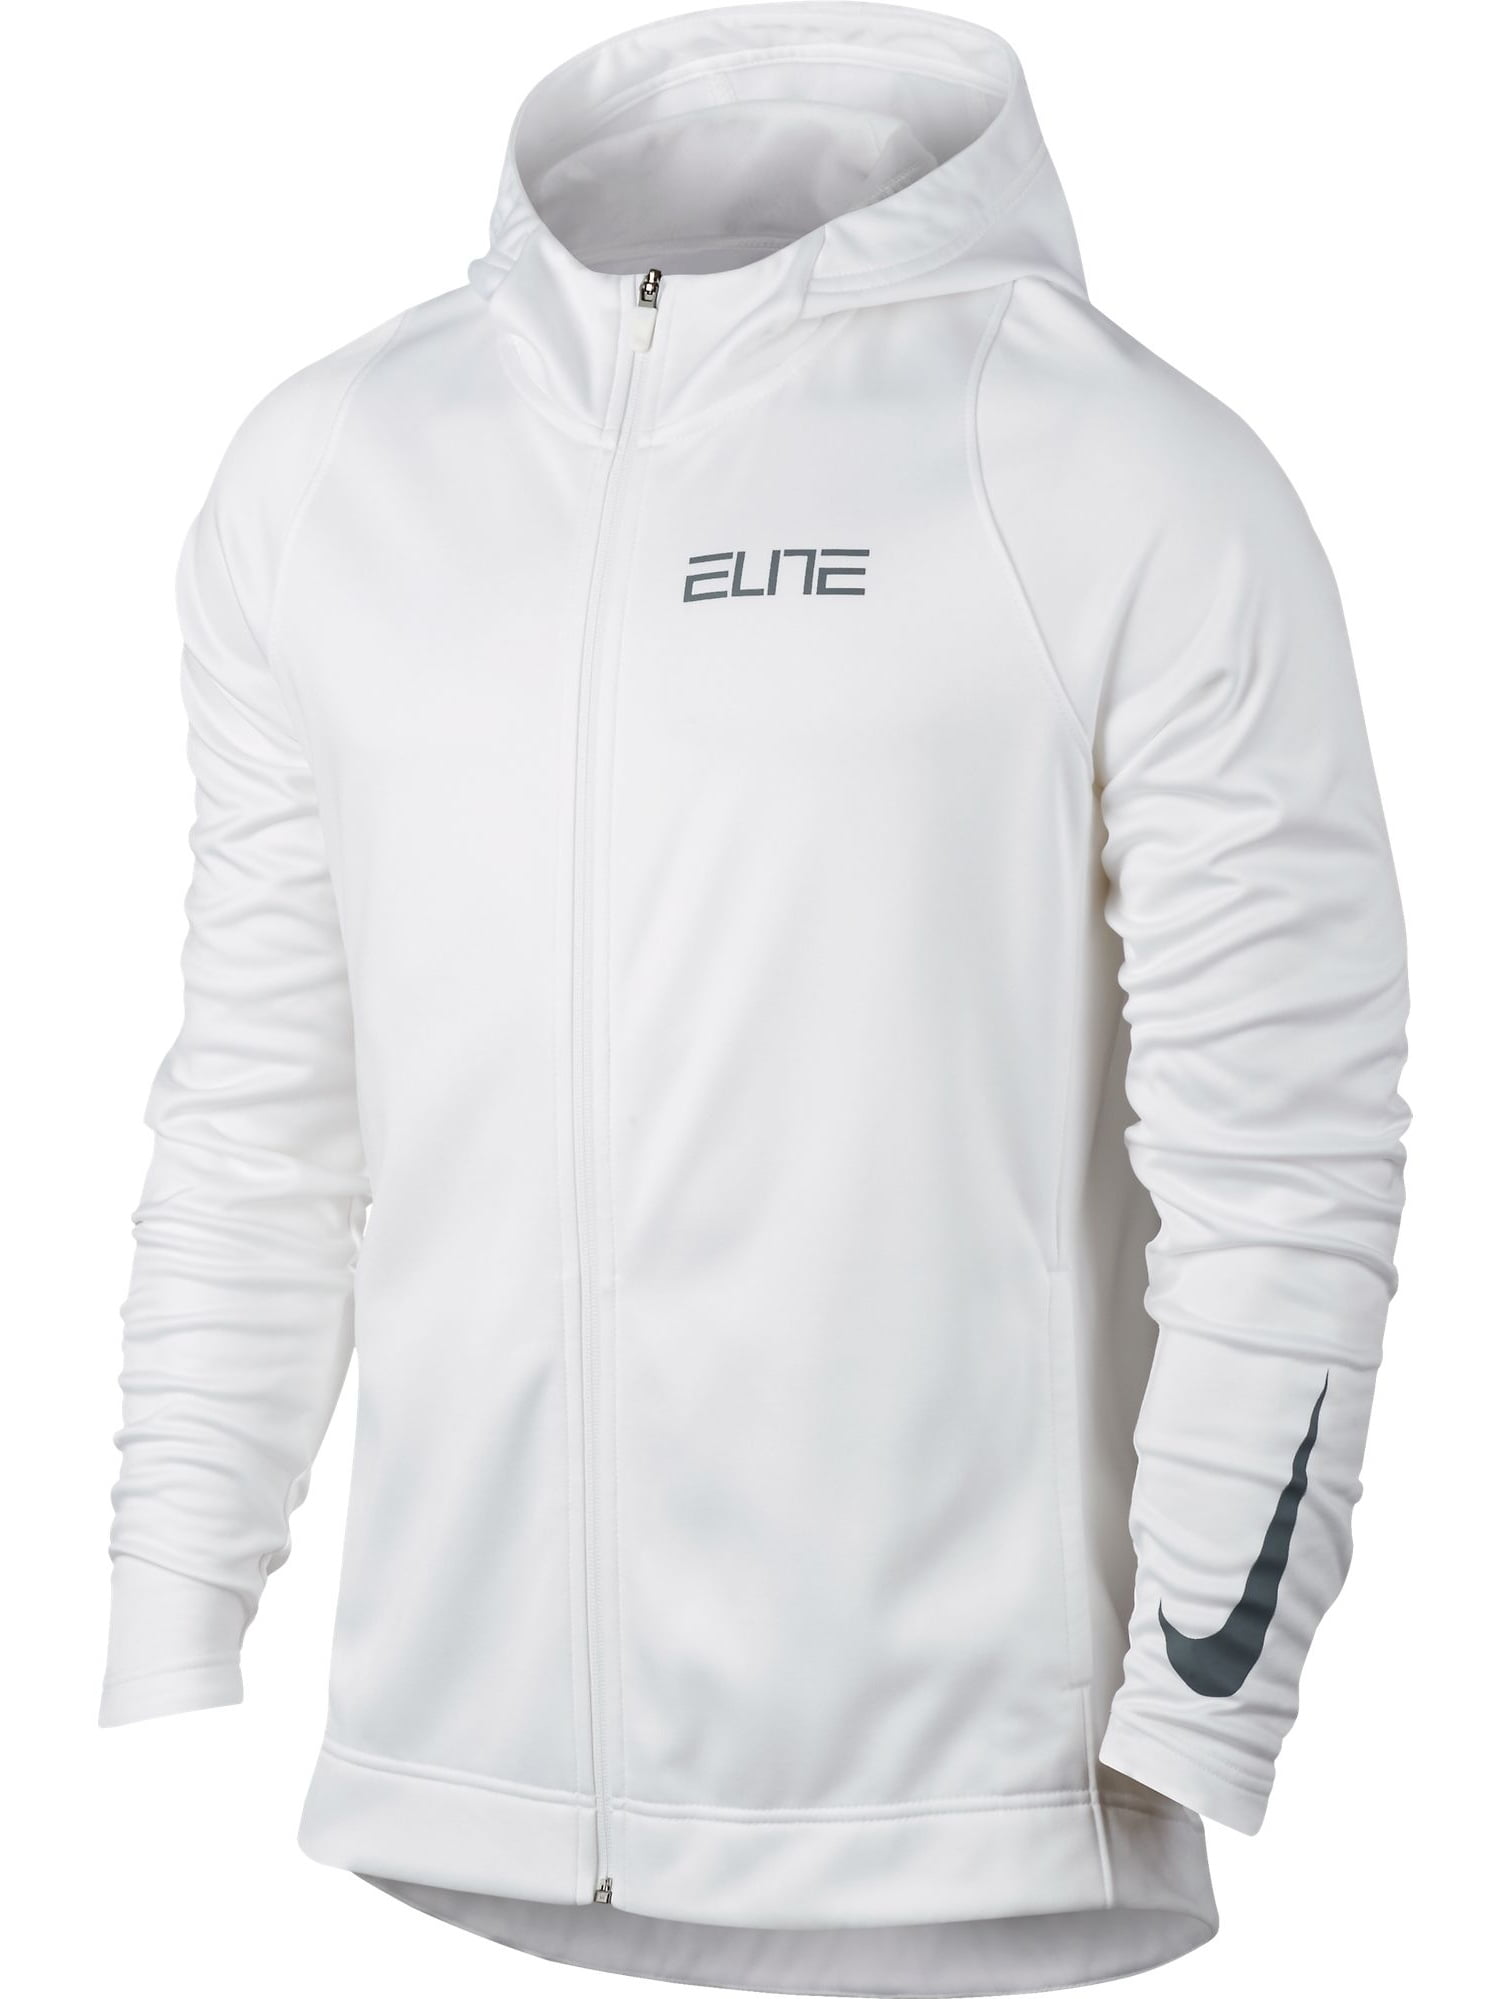 Nike Elite Zip Up Men's Hoody White/Grey 776095-100 - Walmart.com